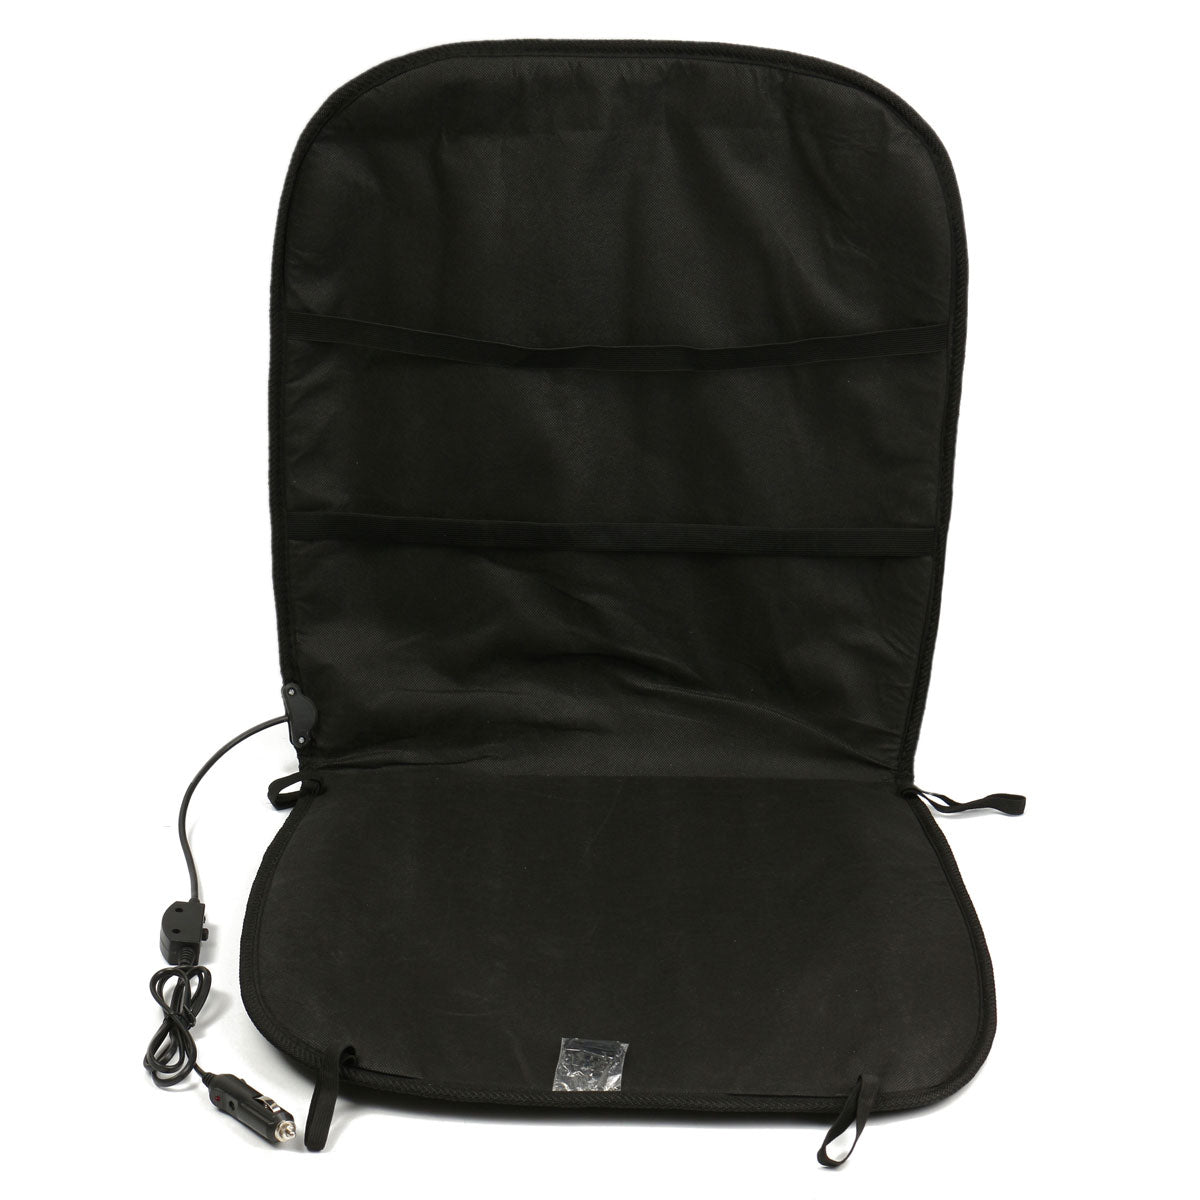 12V Black Car Van Front Seat Cover Heating Cushion Heated Pad Winter Auto Interior Warmer - Auto GoShop